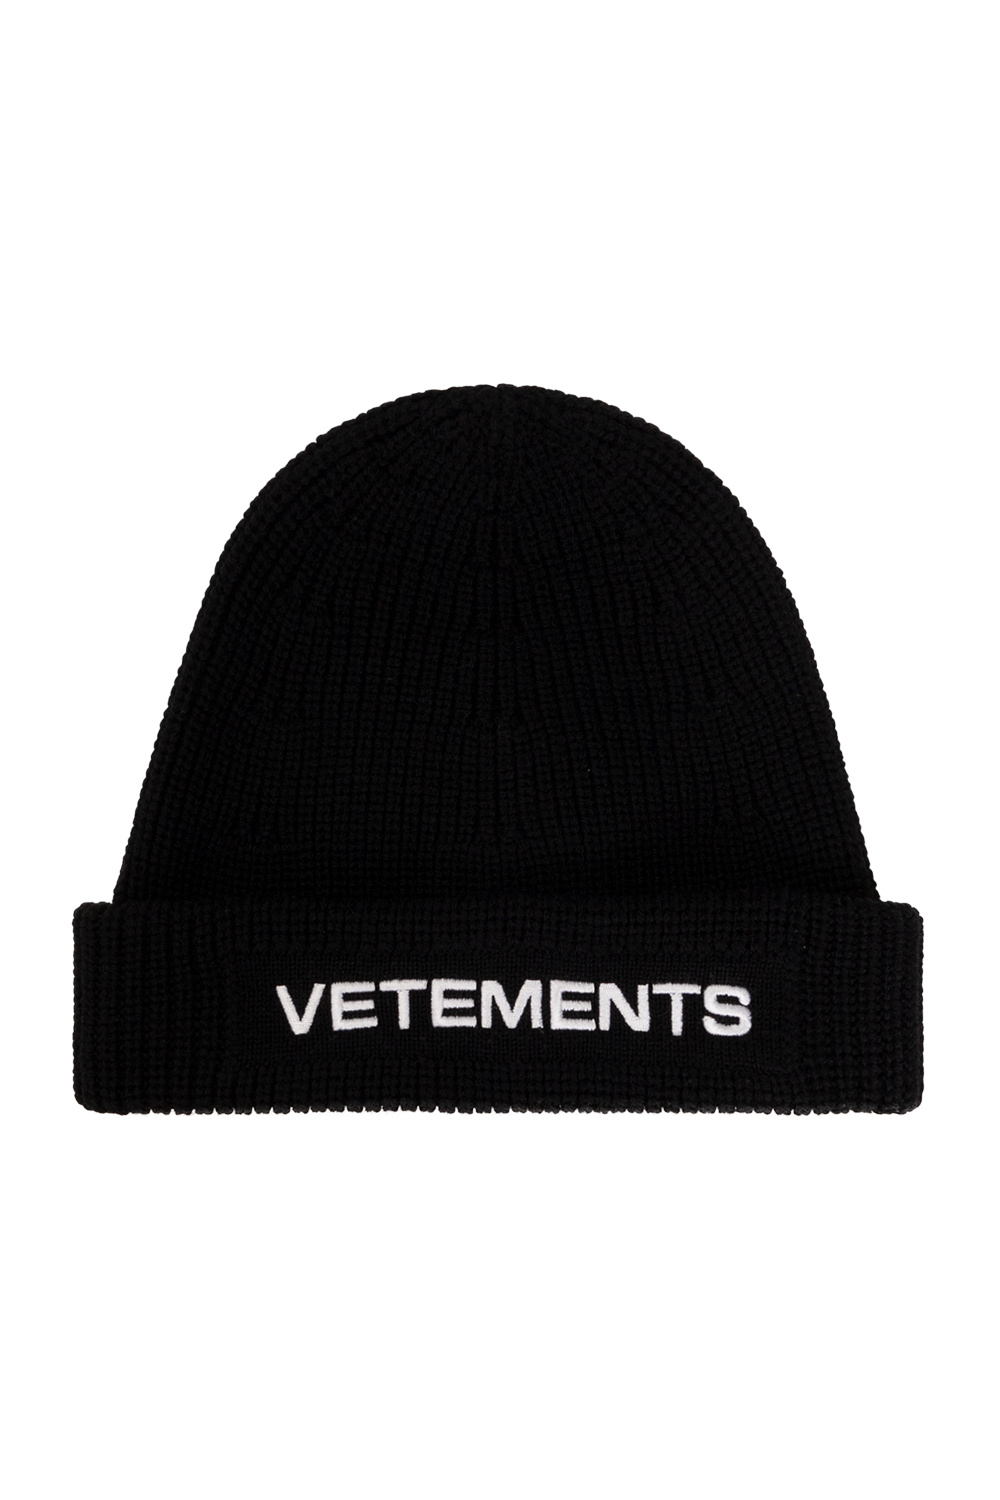 StclaircomoShops | a woven hat | Men\'s Accessorie | VETEMENTS Beanie with  logo | Strickmützen